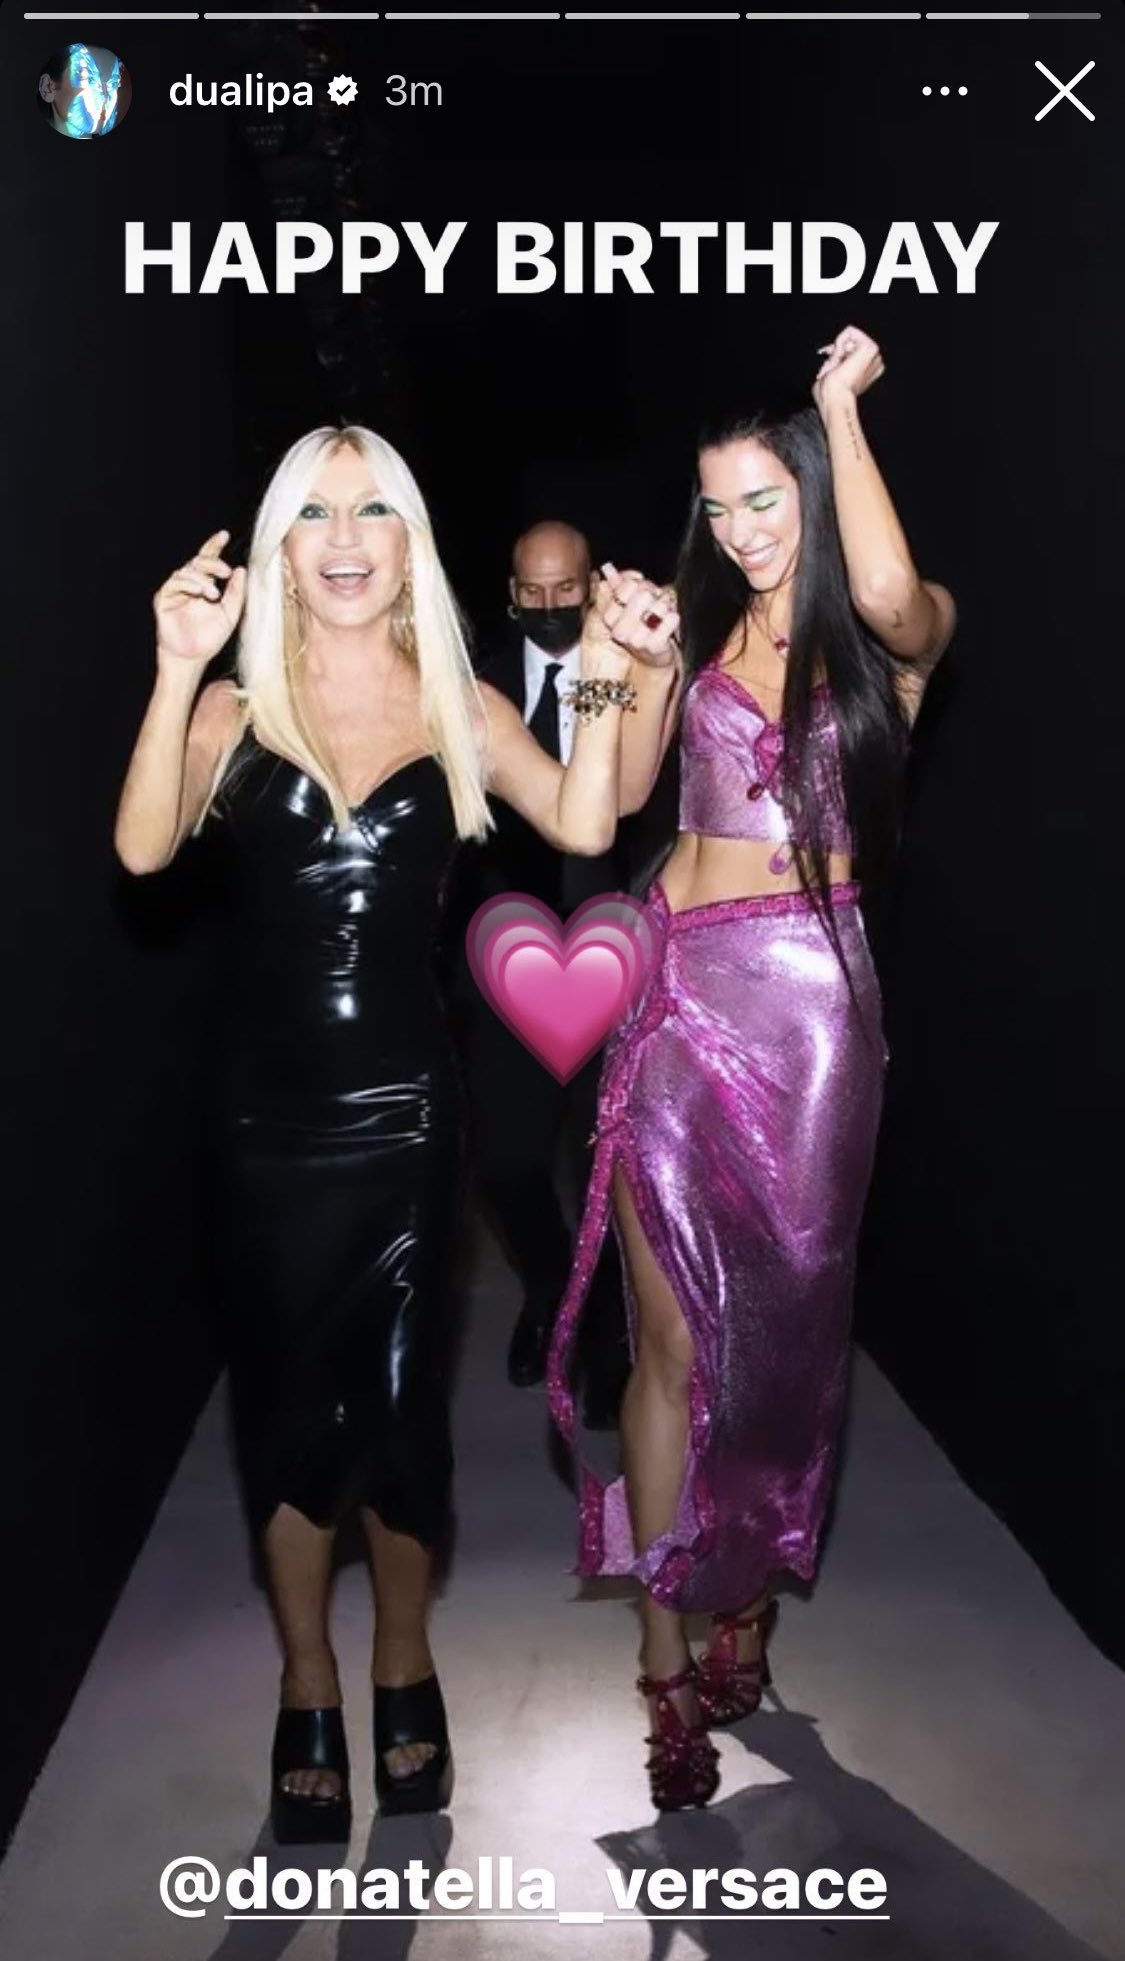 Dua Lipa wishing Donatella Versace a Happy Birthday via Instagram Stories! 